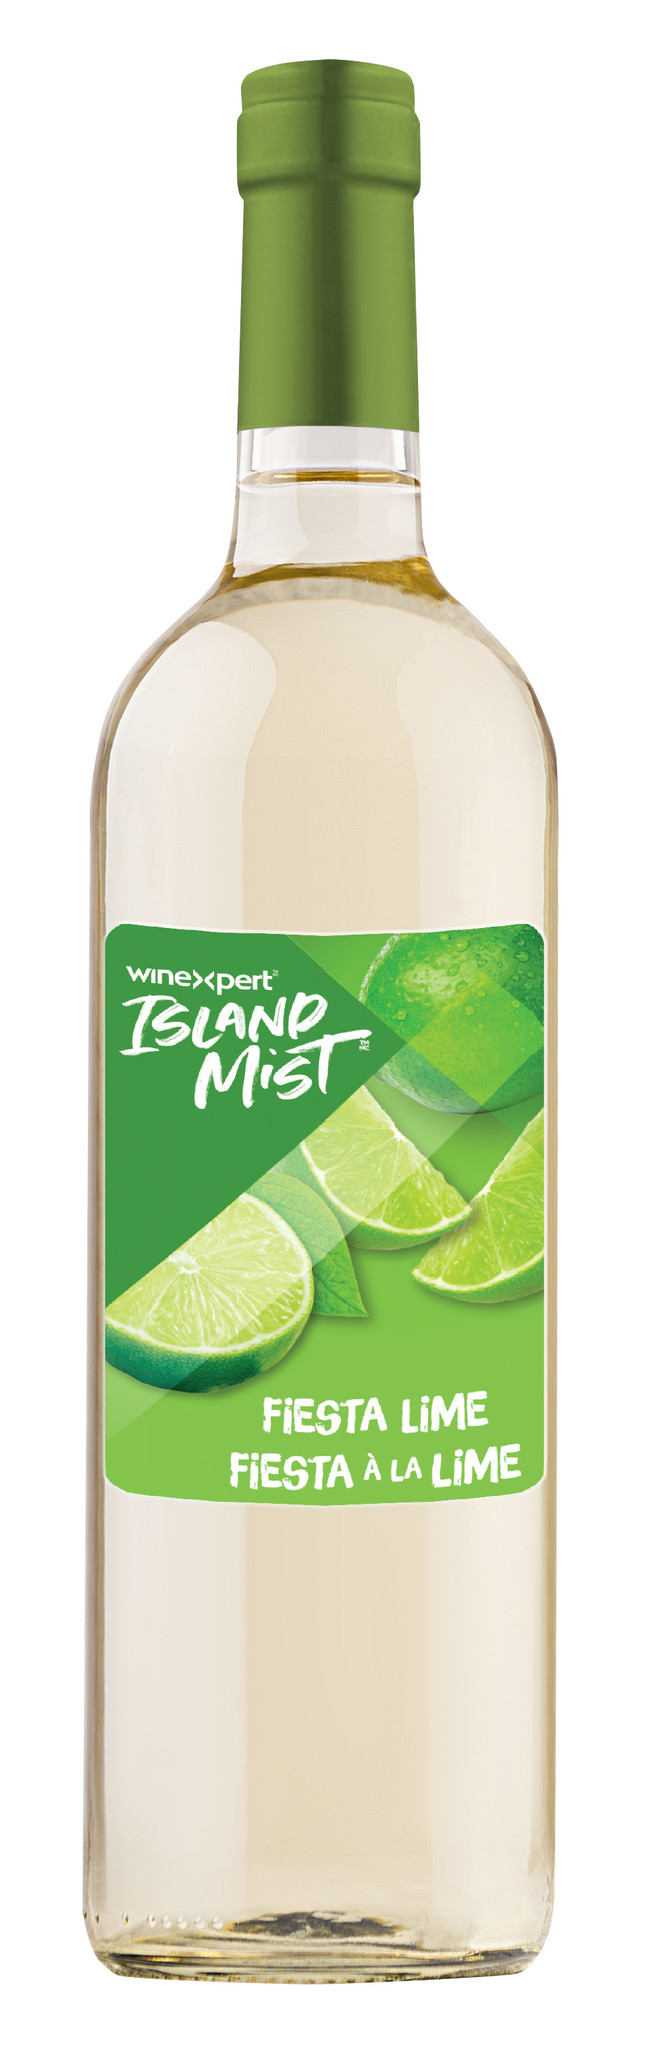 WinExpert Fiesta Lime (Island Mist)